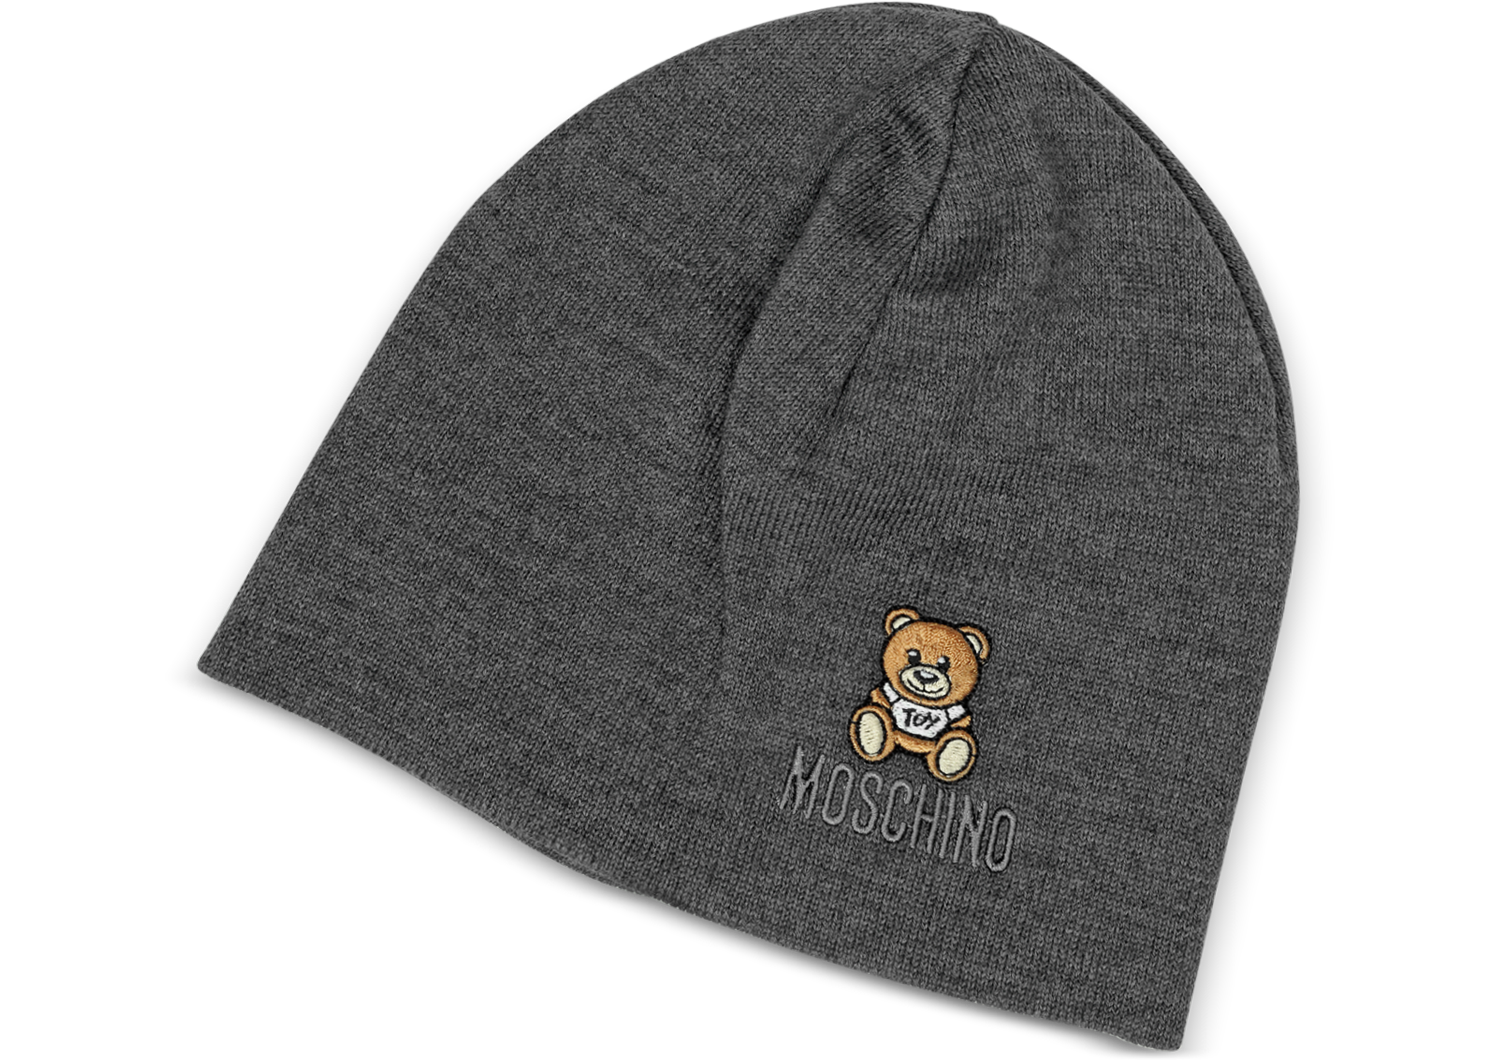 moschino bear hat